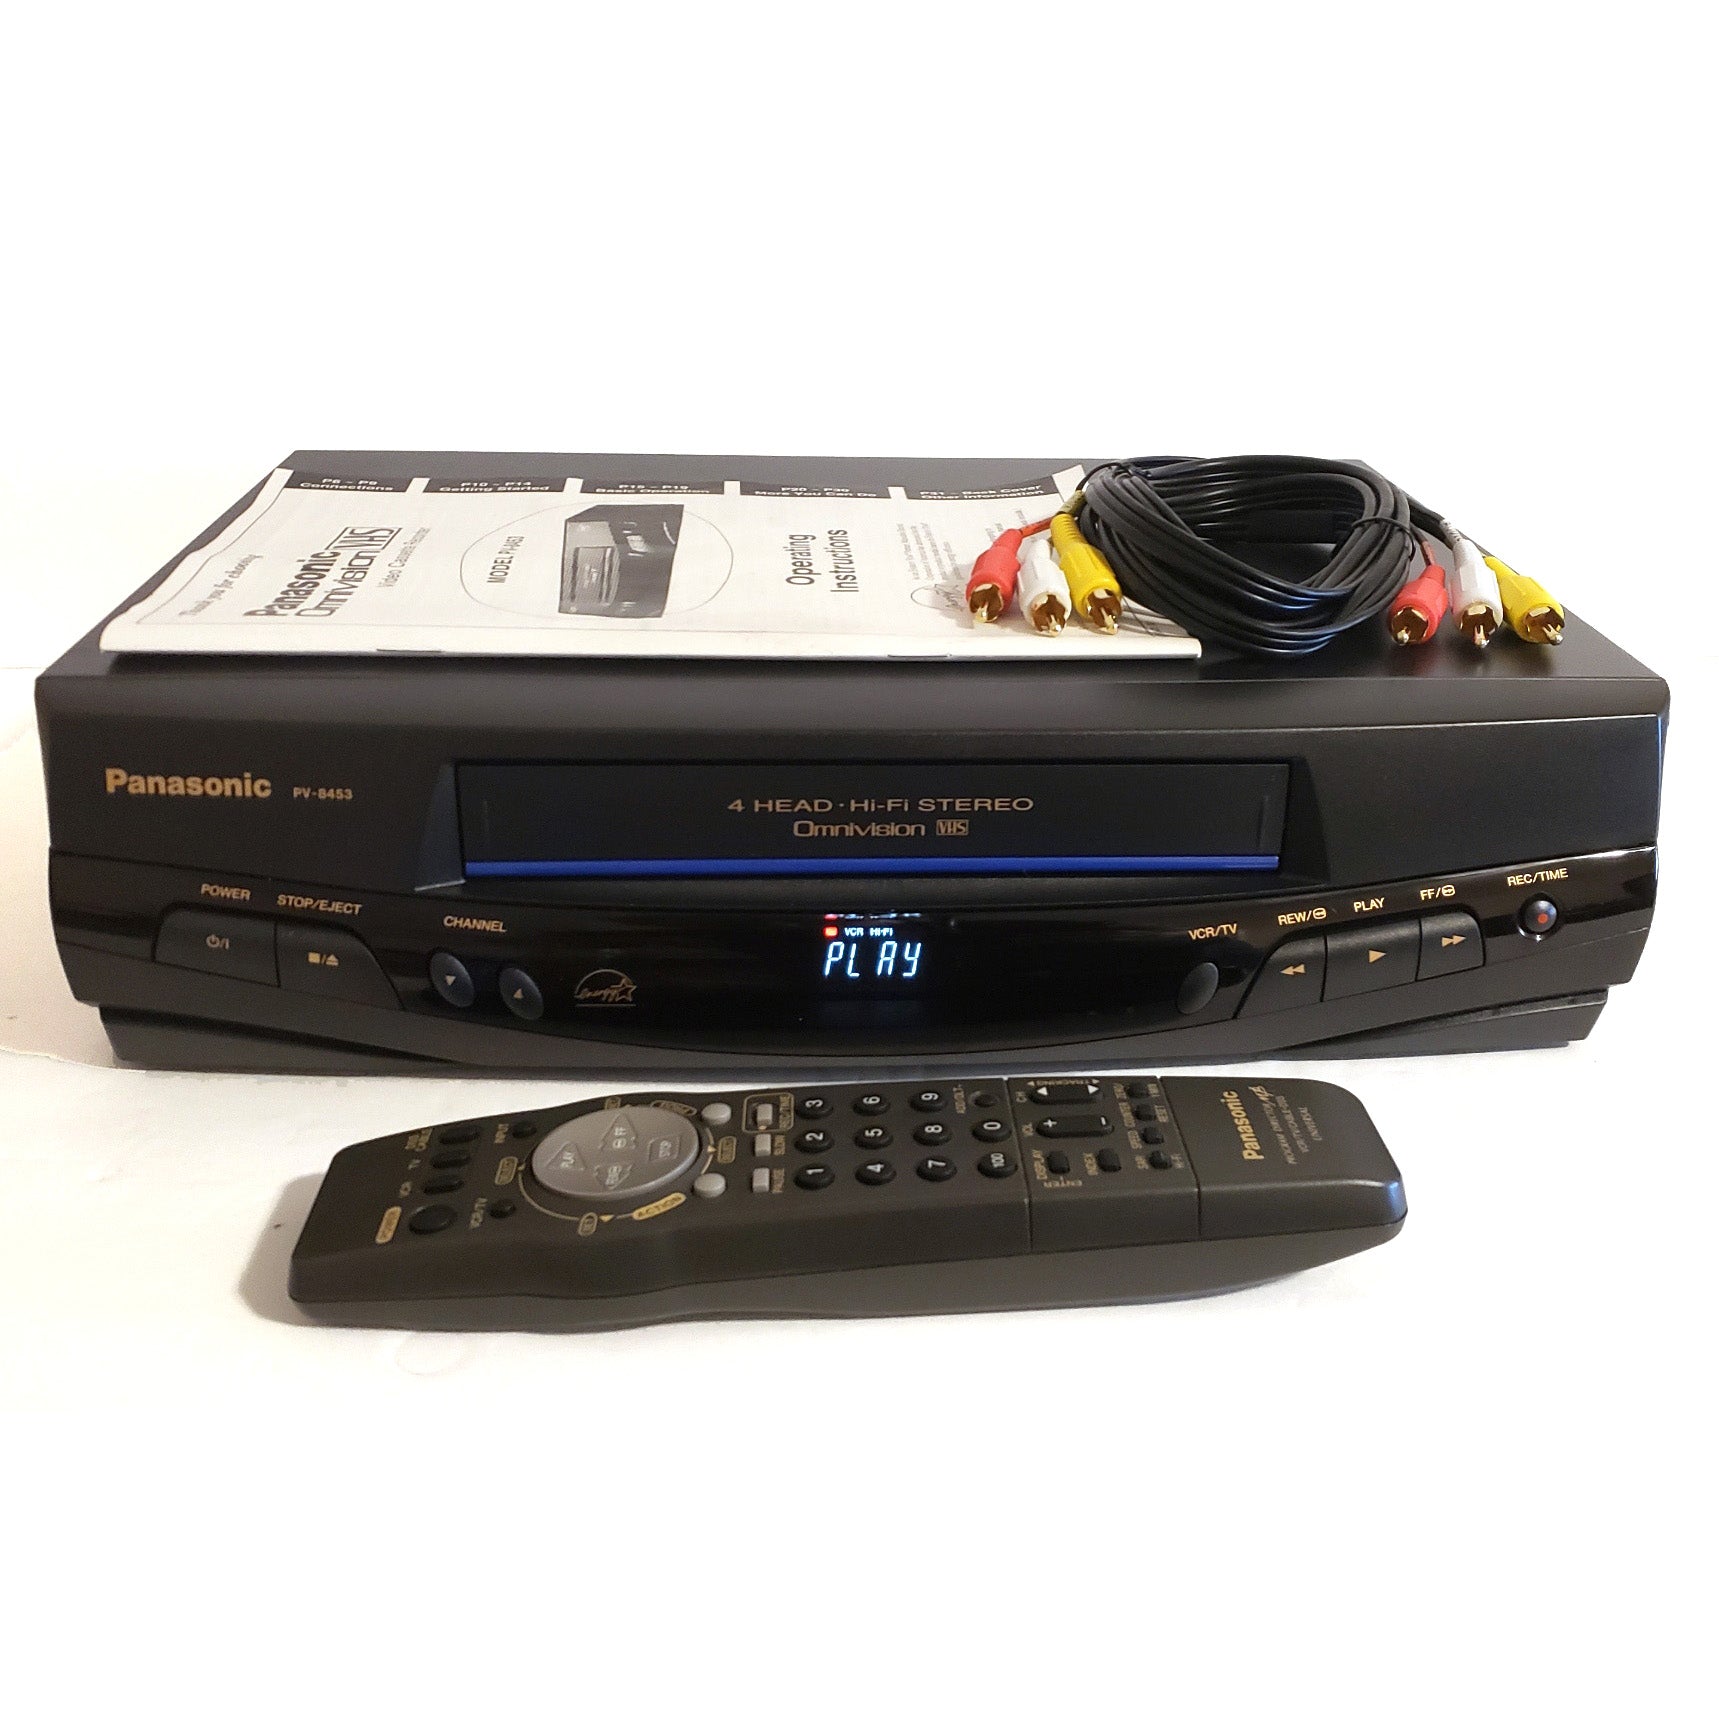 Panasonic PV-8453 Omnivision VCR, 4-Head Hi-Fi Stereo